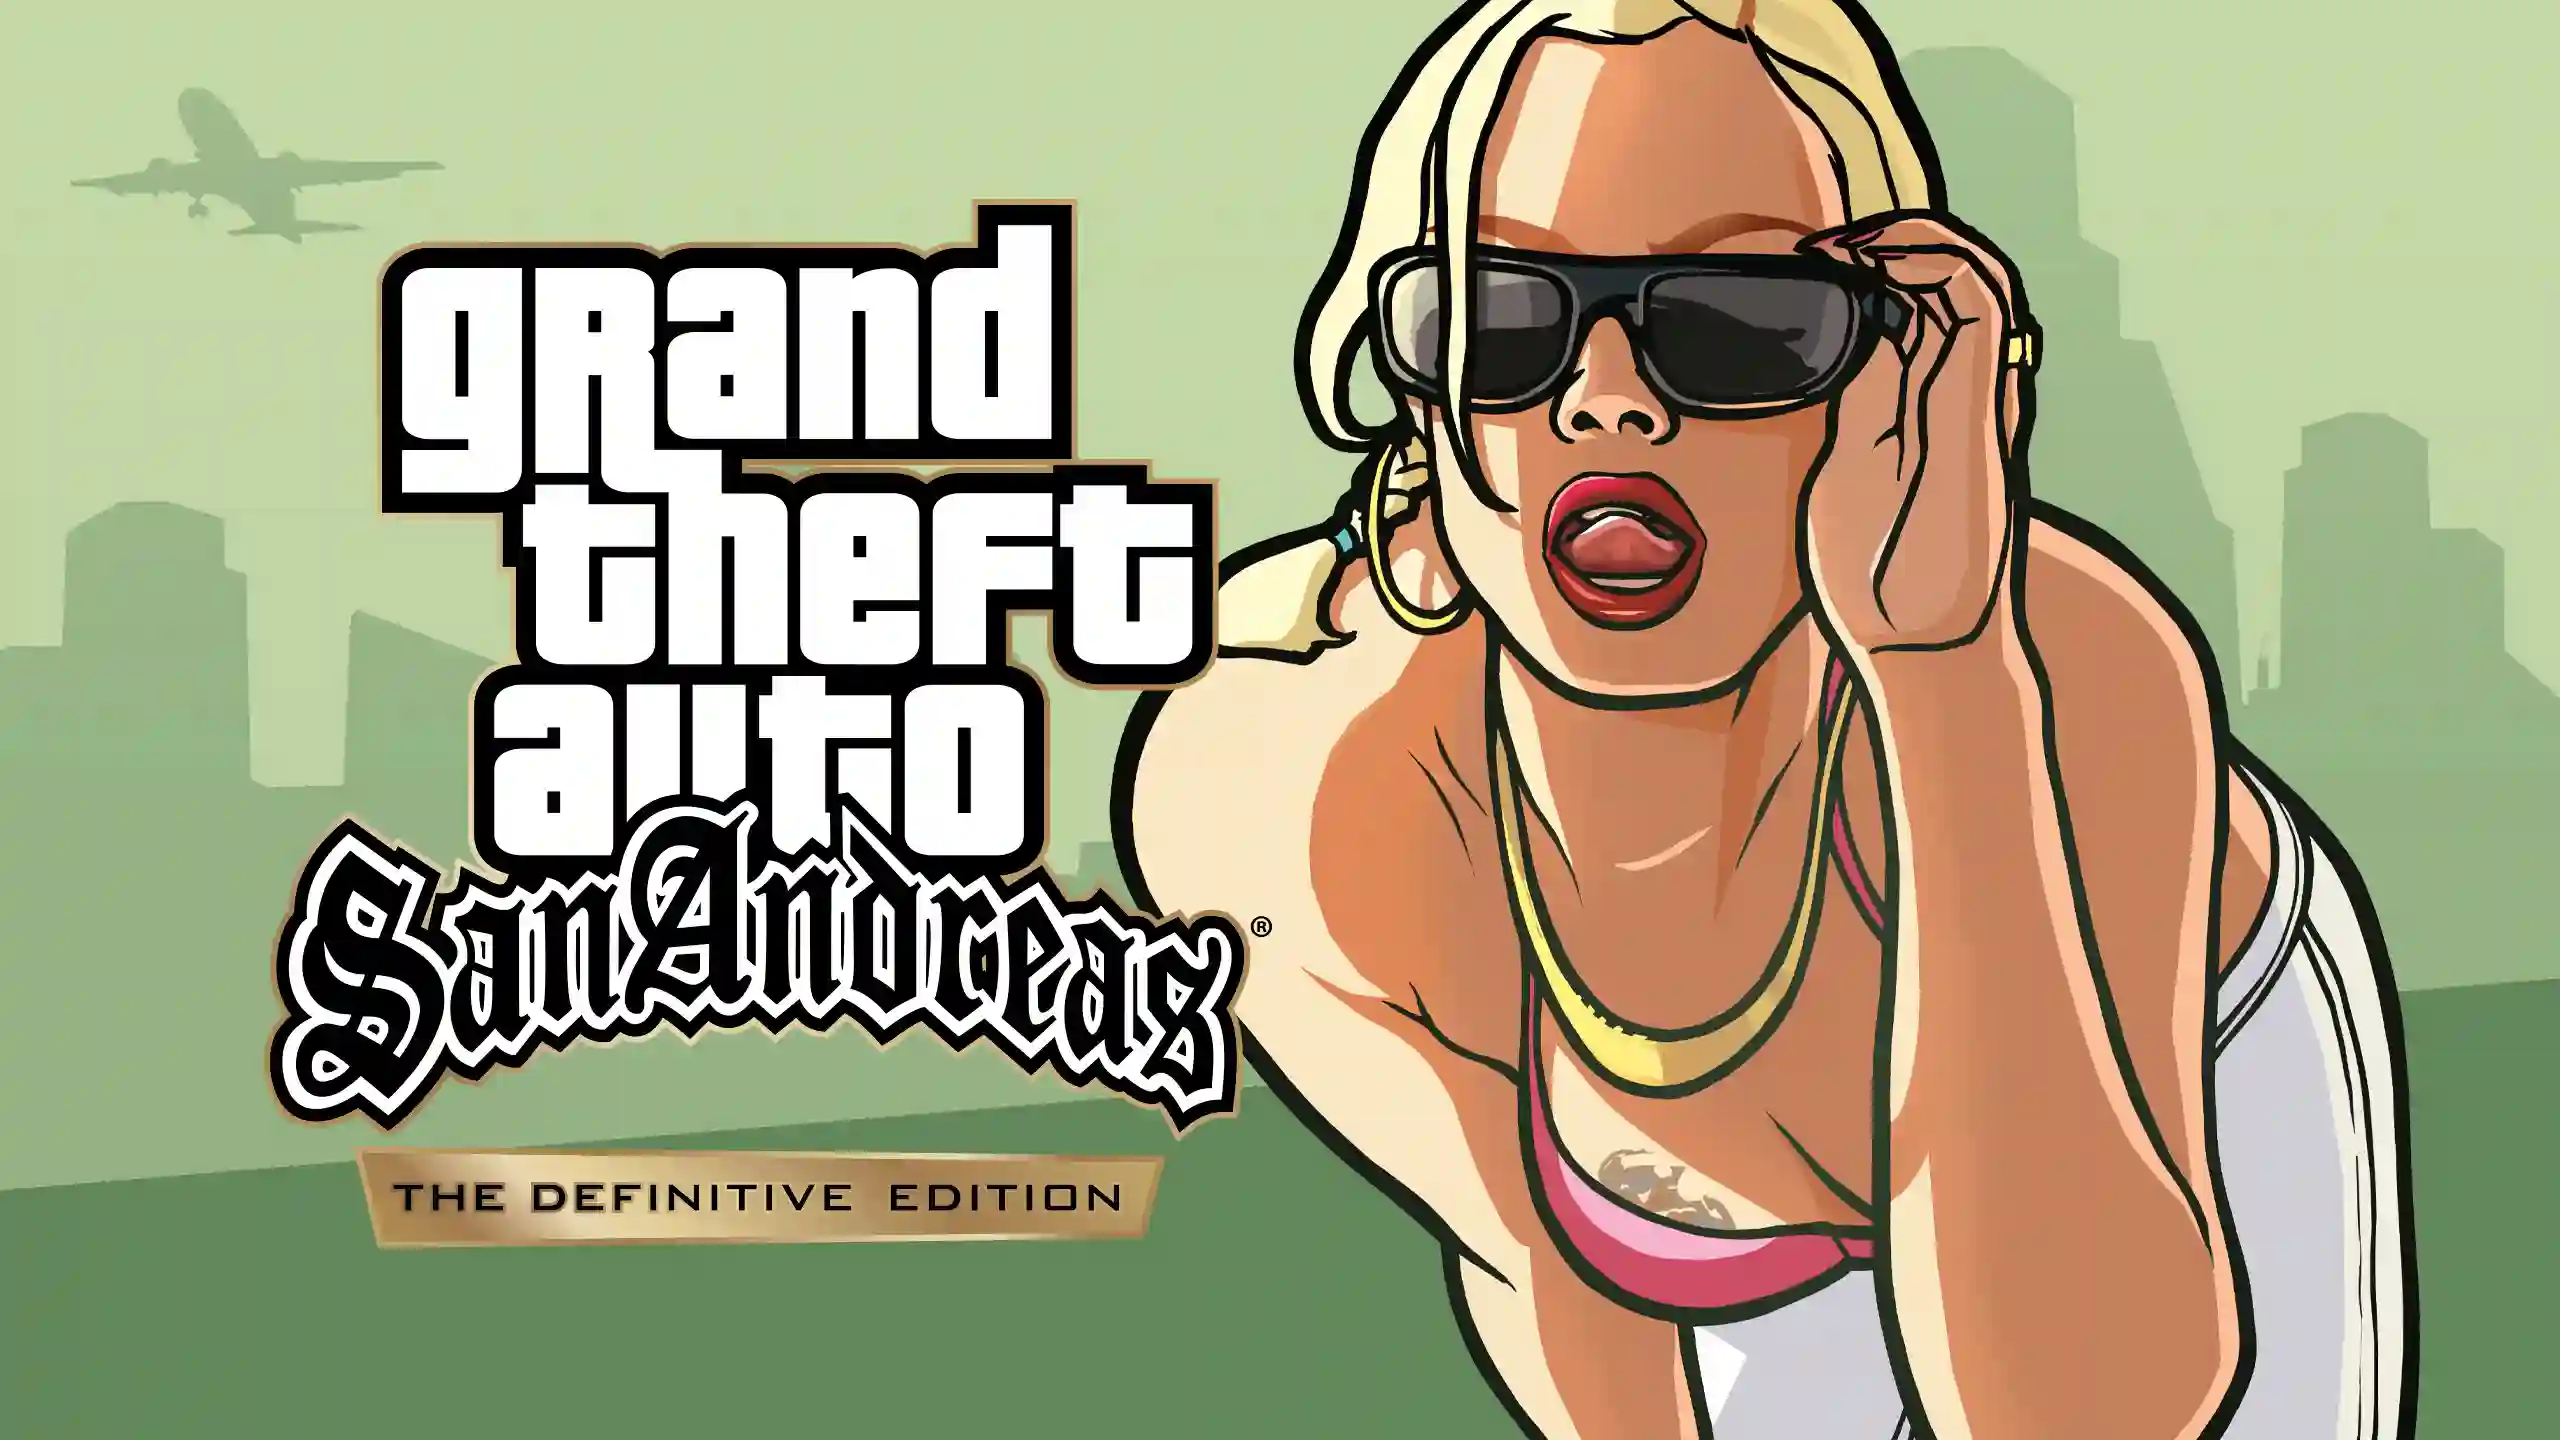 Auto Grand Theft San Andreas